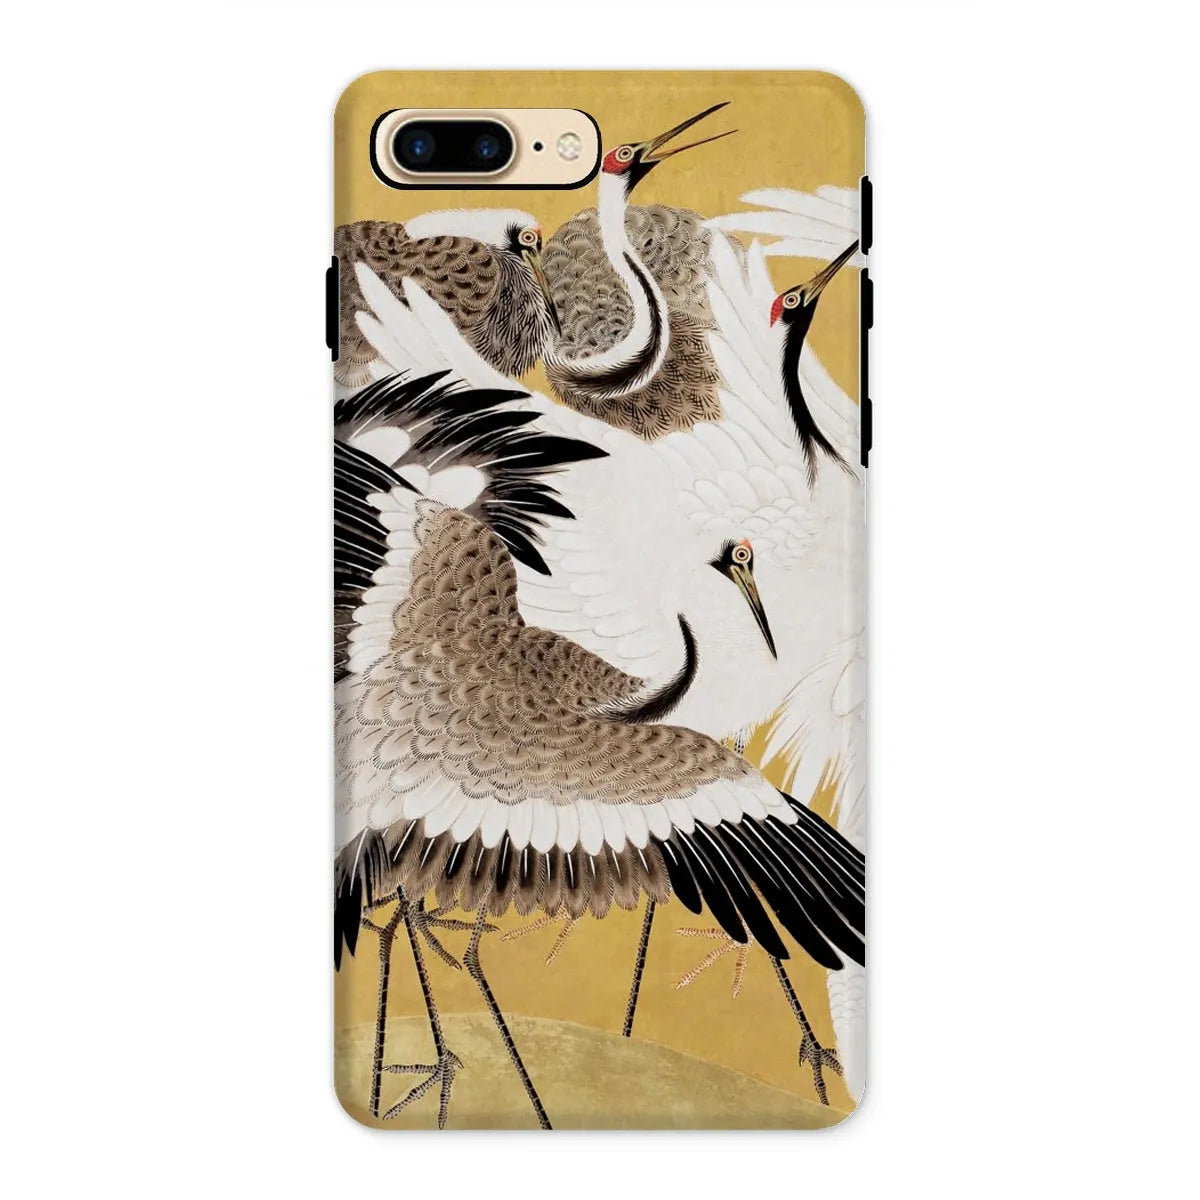 Flock Of Cranes Japanese Bird Art Phone Case - Ishida Yūtei - Iphone 8 Plus / Matte - Mobile Phone Cases - Aesthetic